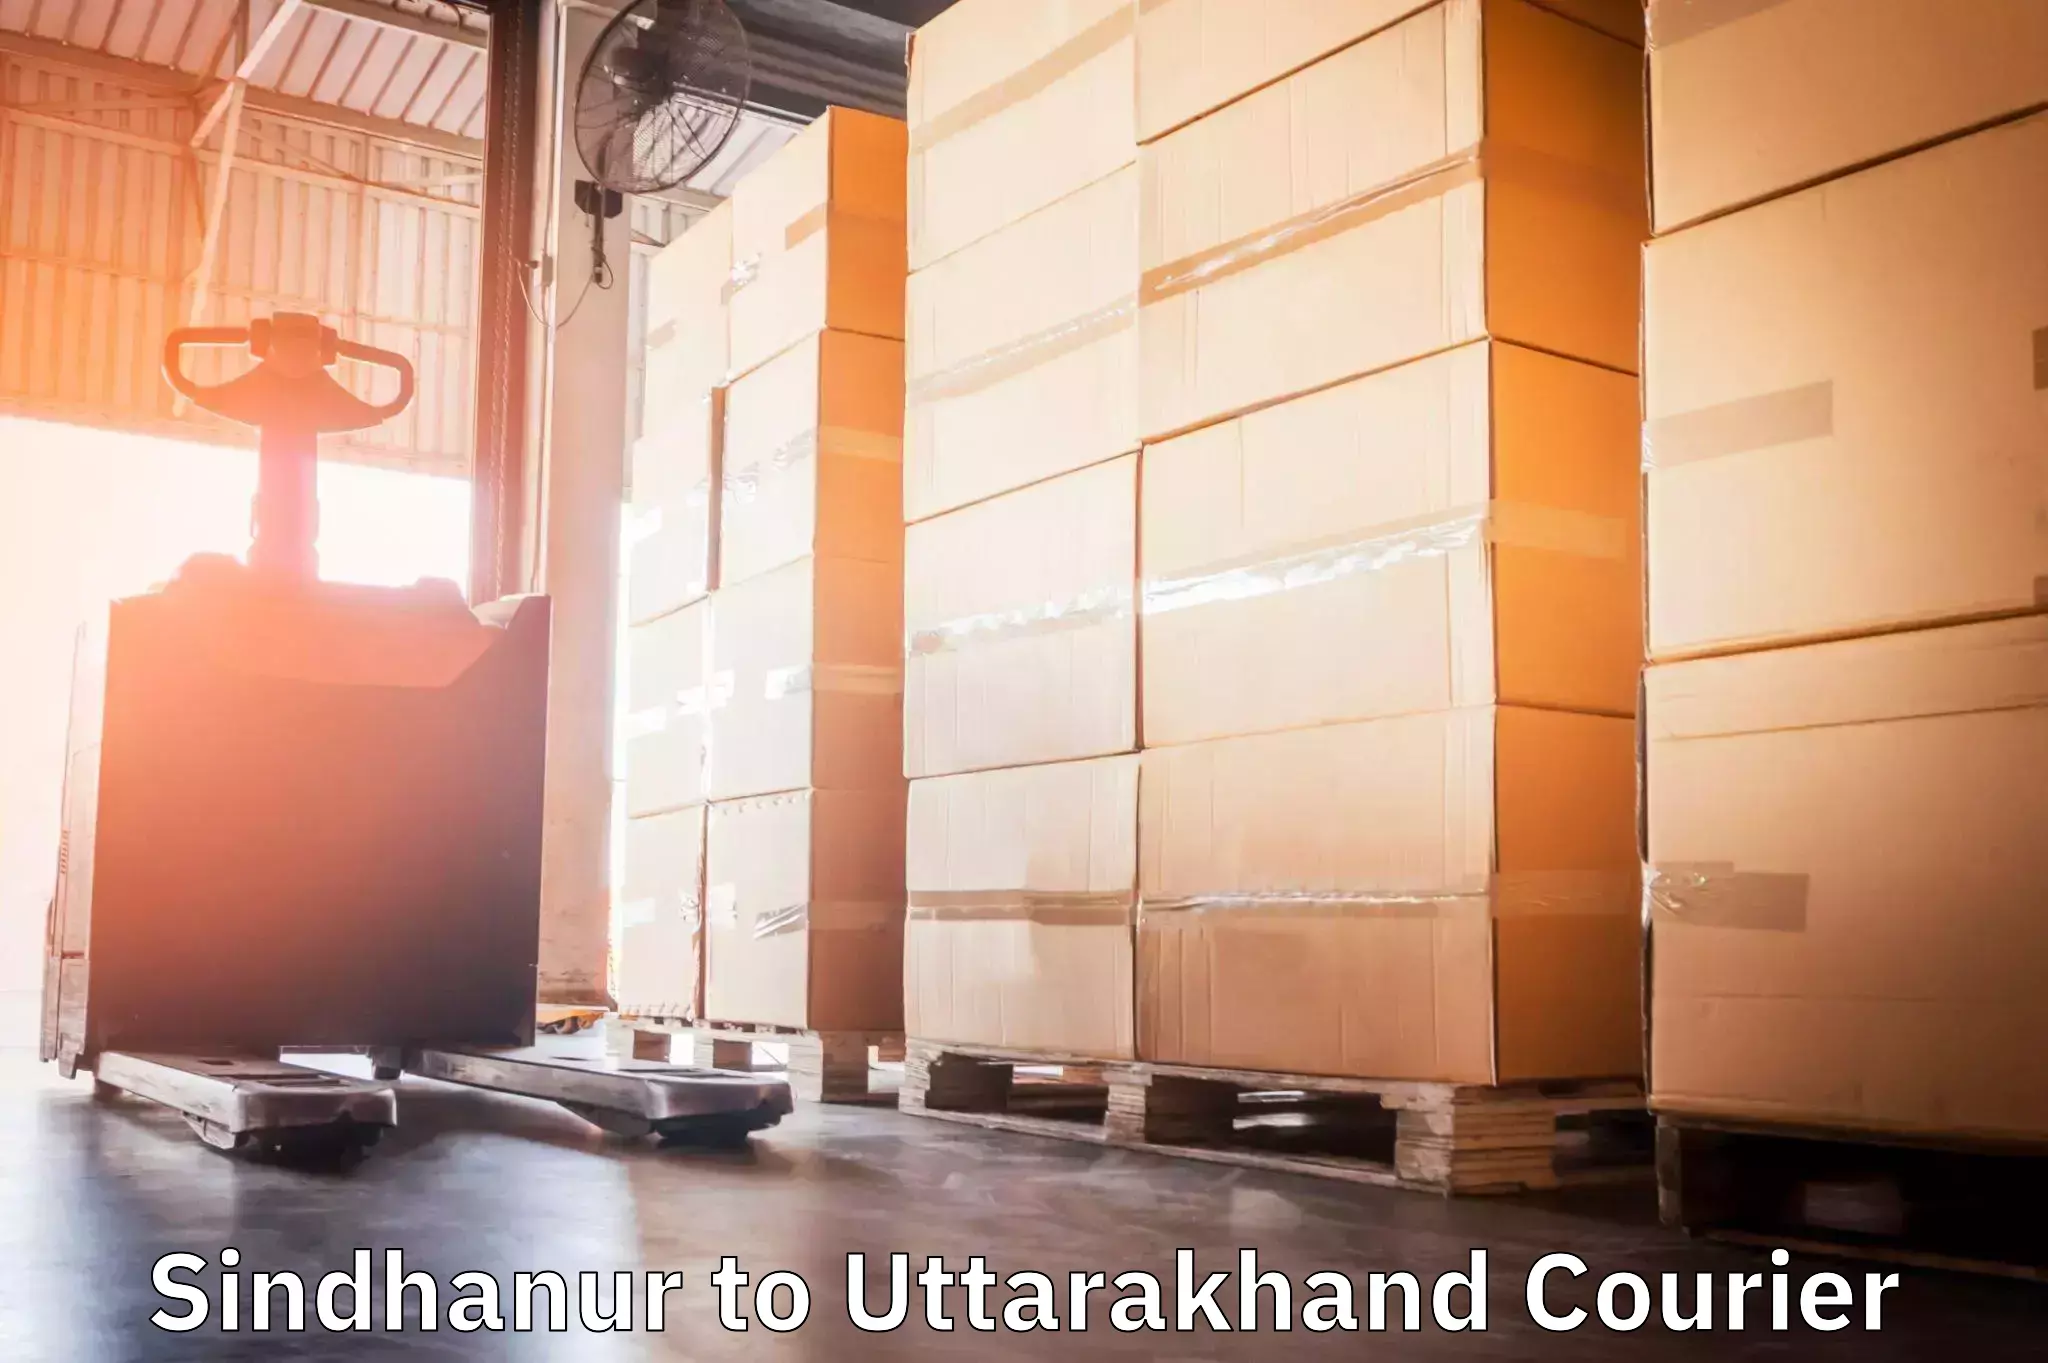 Global courier networks Sindhanur to Uttarakhand